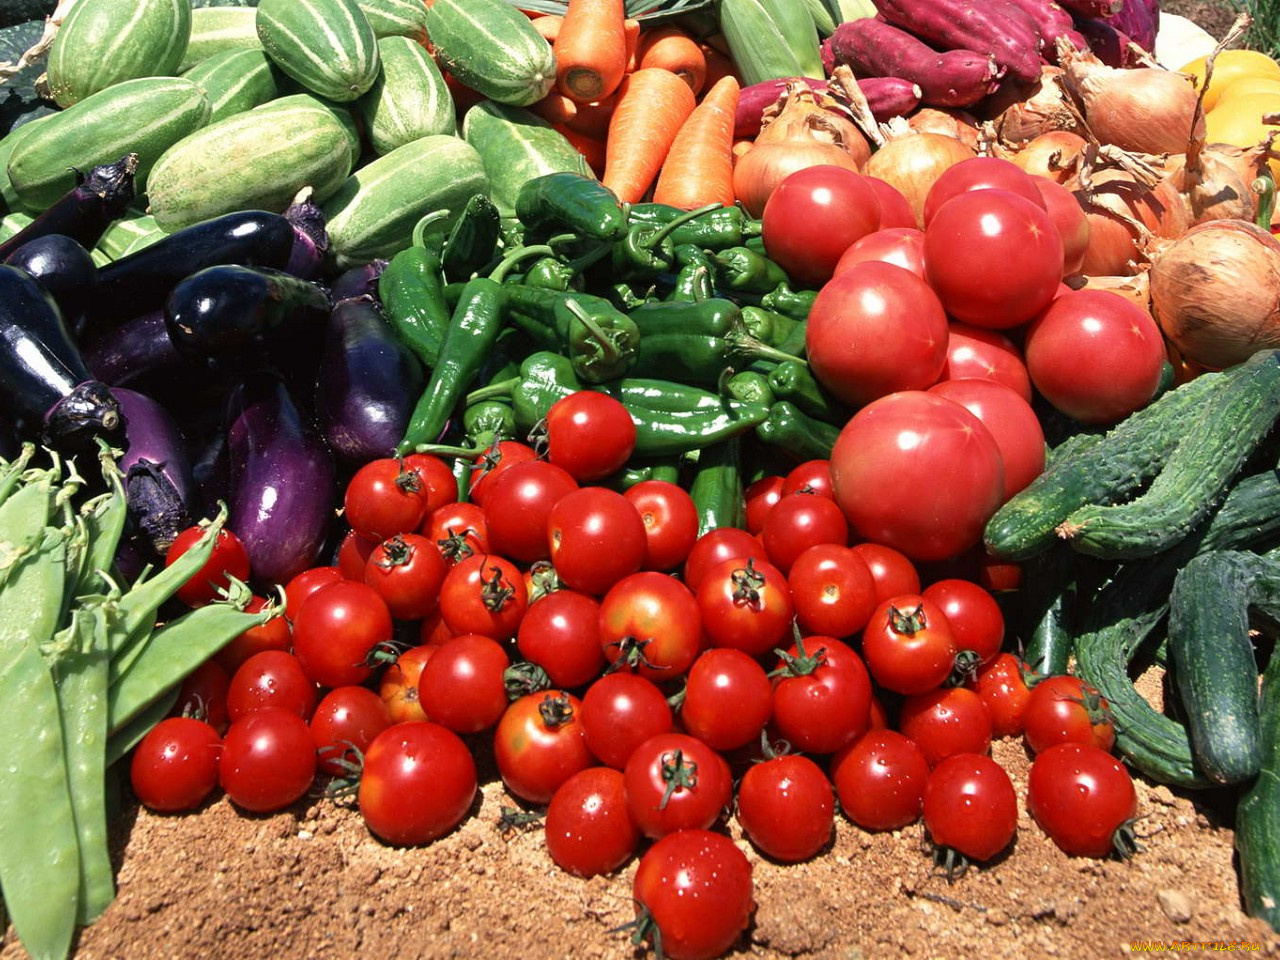 еда, овощи, помидоры, томаты